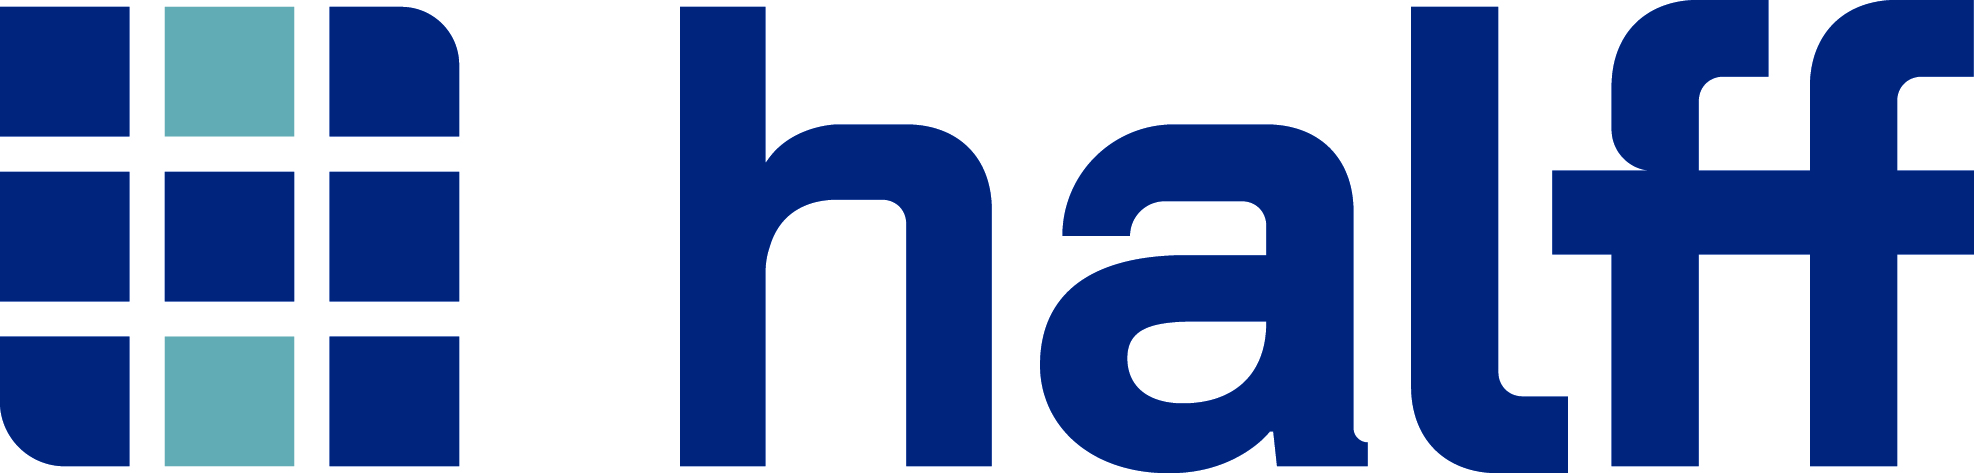 Halff brand logo and link